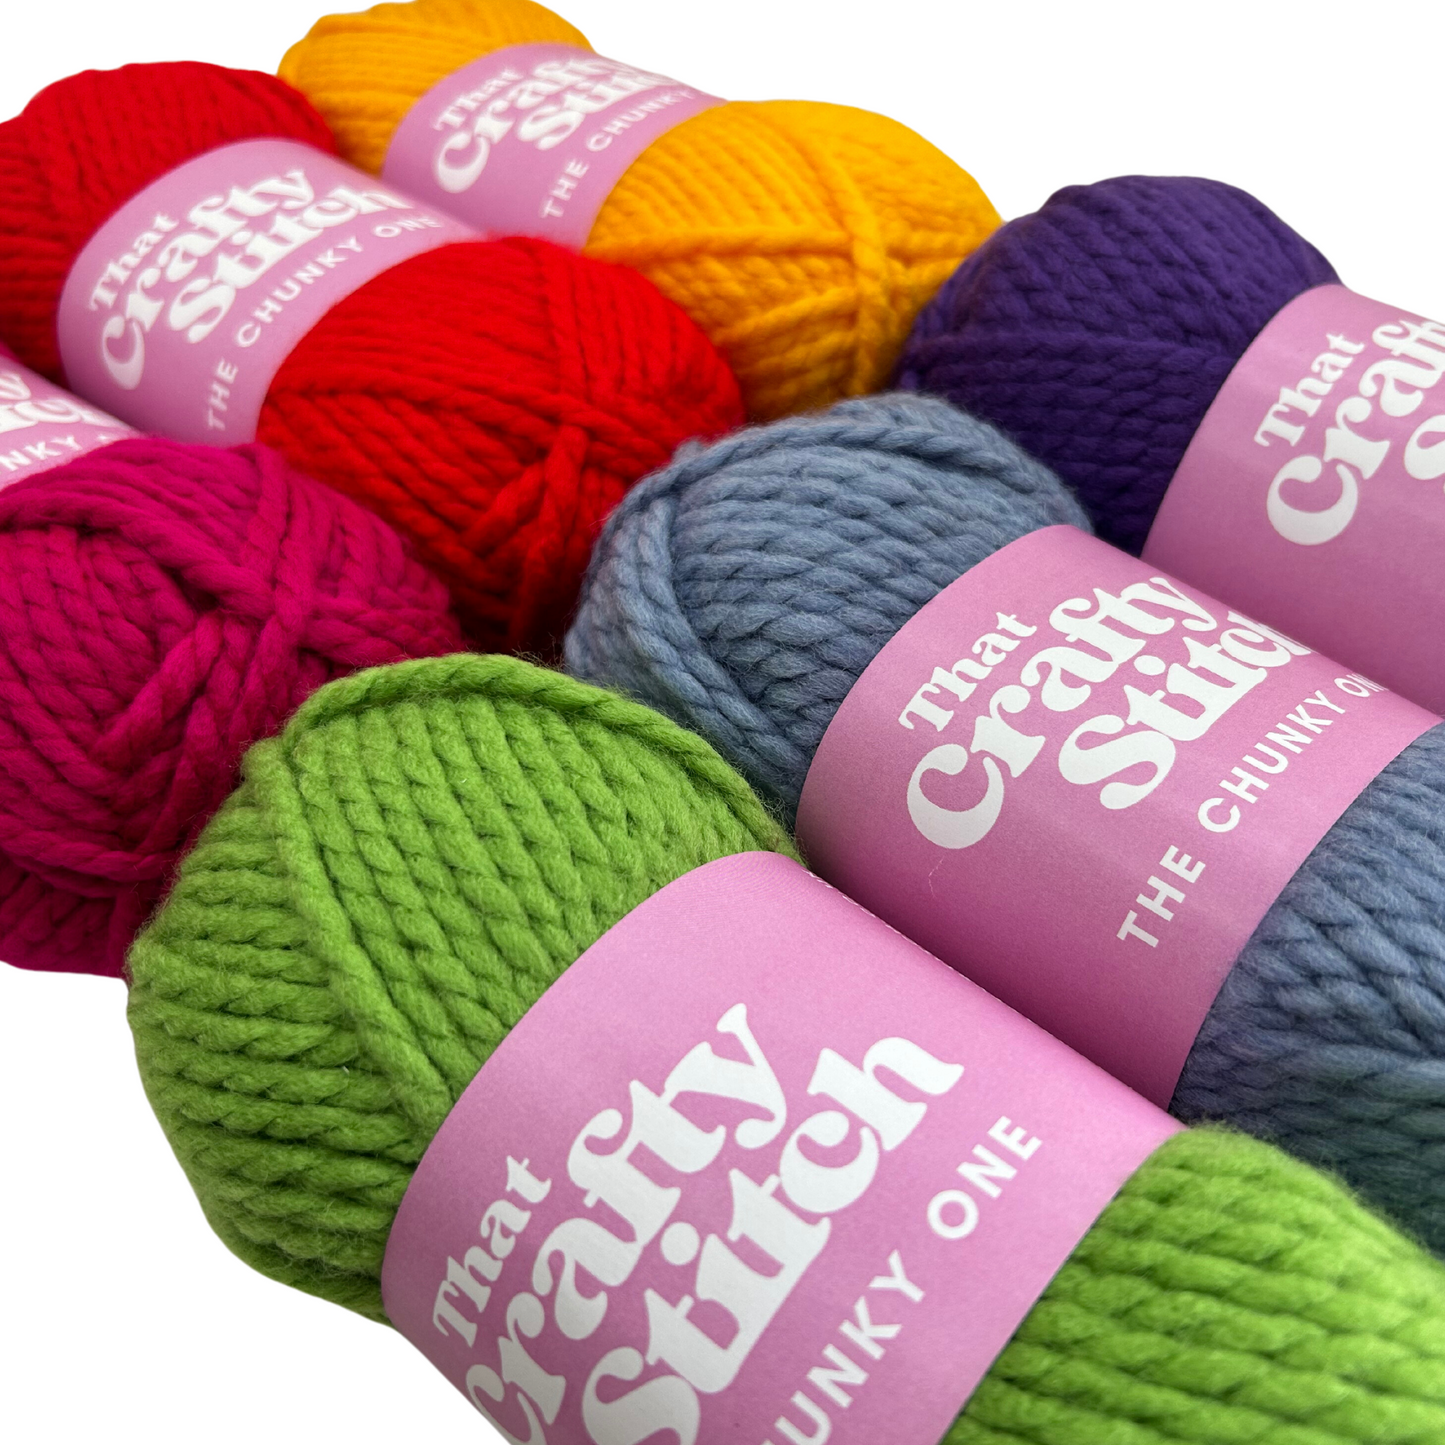 Rainbow super chunky yarn bundle